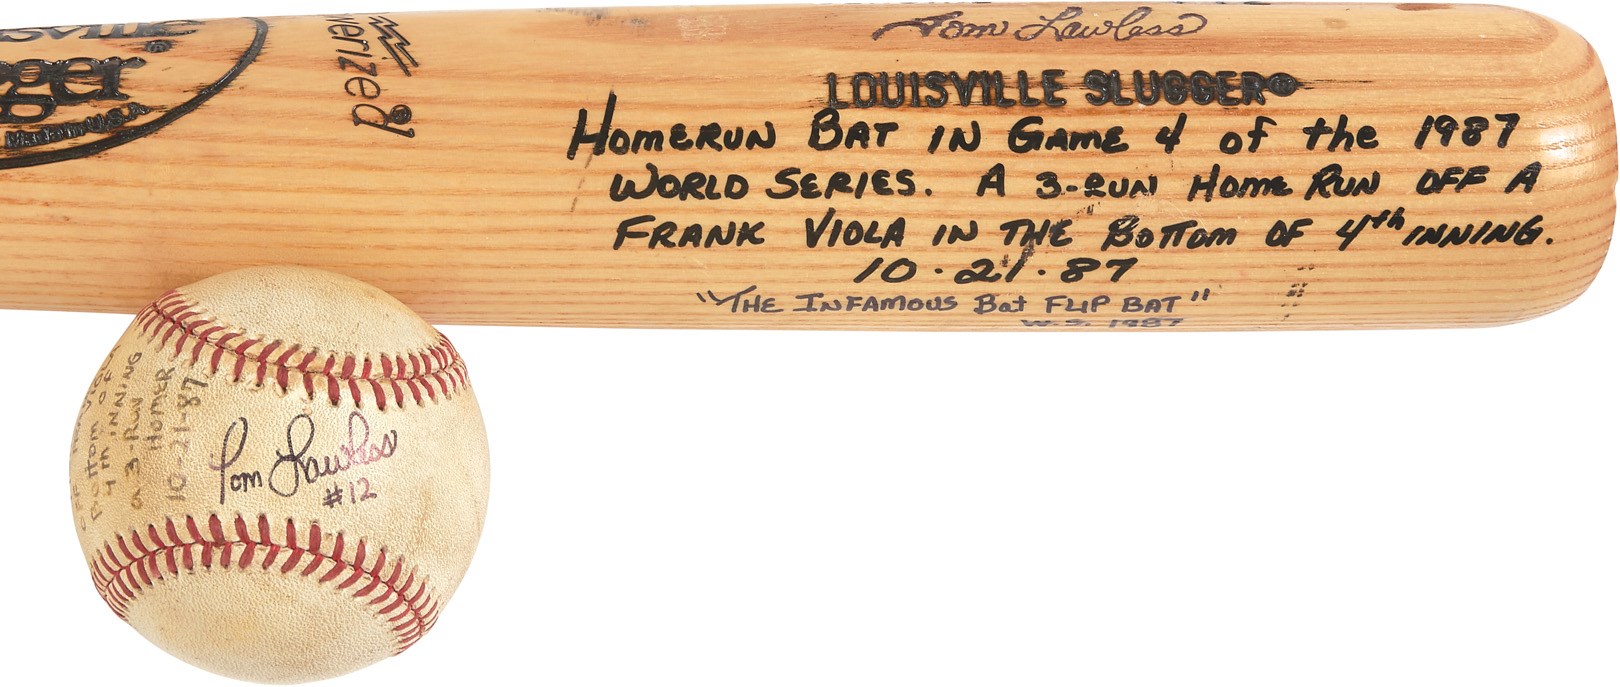 1987 World Series Tom Lawless Game Used "Bat Flip" Home Run Bat & Ball (Photo-Matched, Lawless LOA)